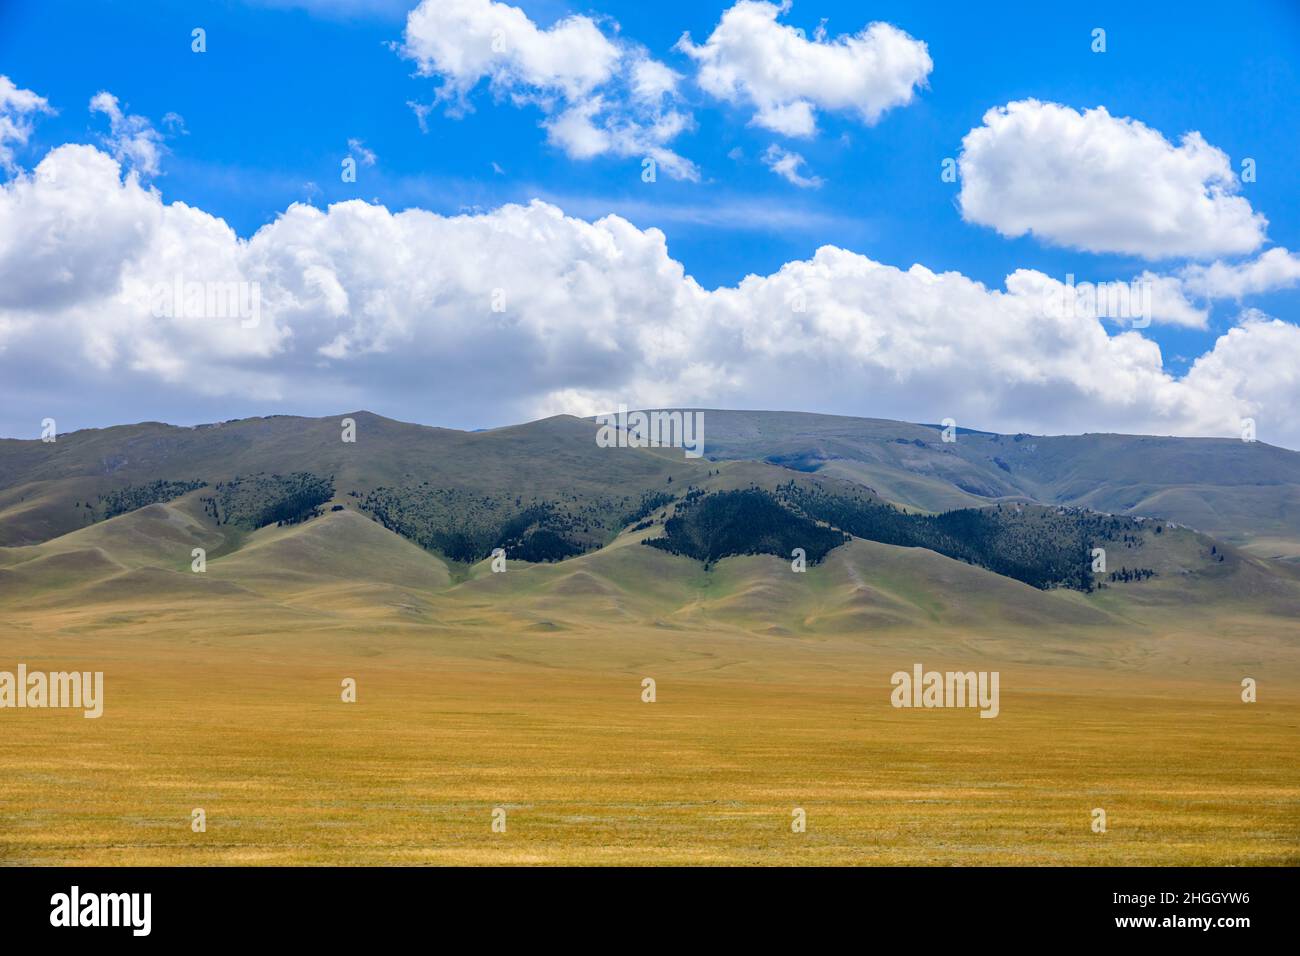 Xinjiang grassland and mountain scenery in autumn season,China. Stock Photo